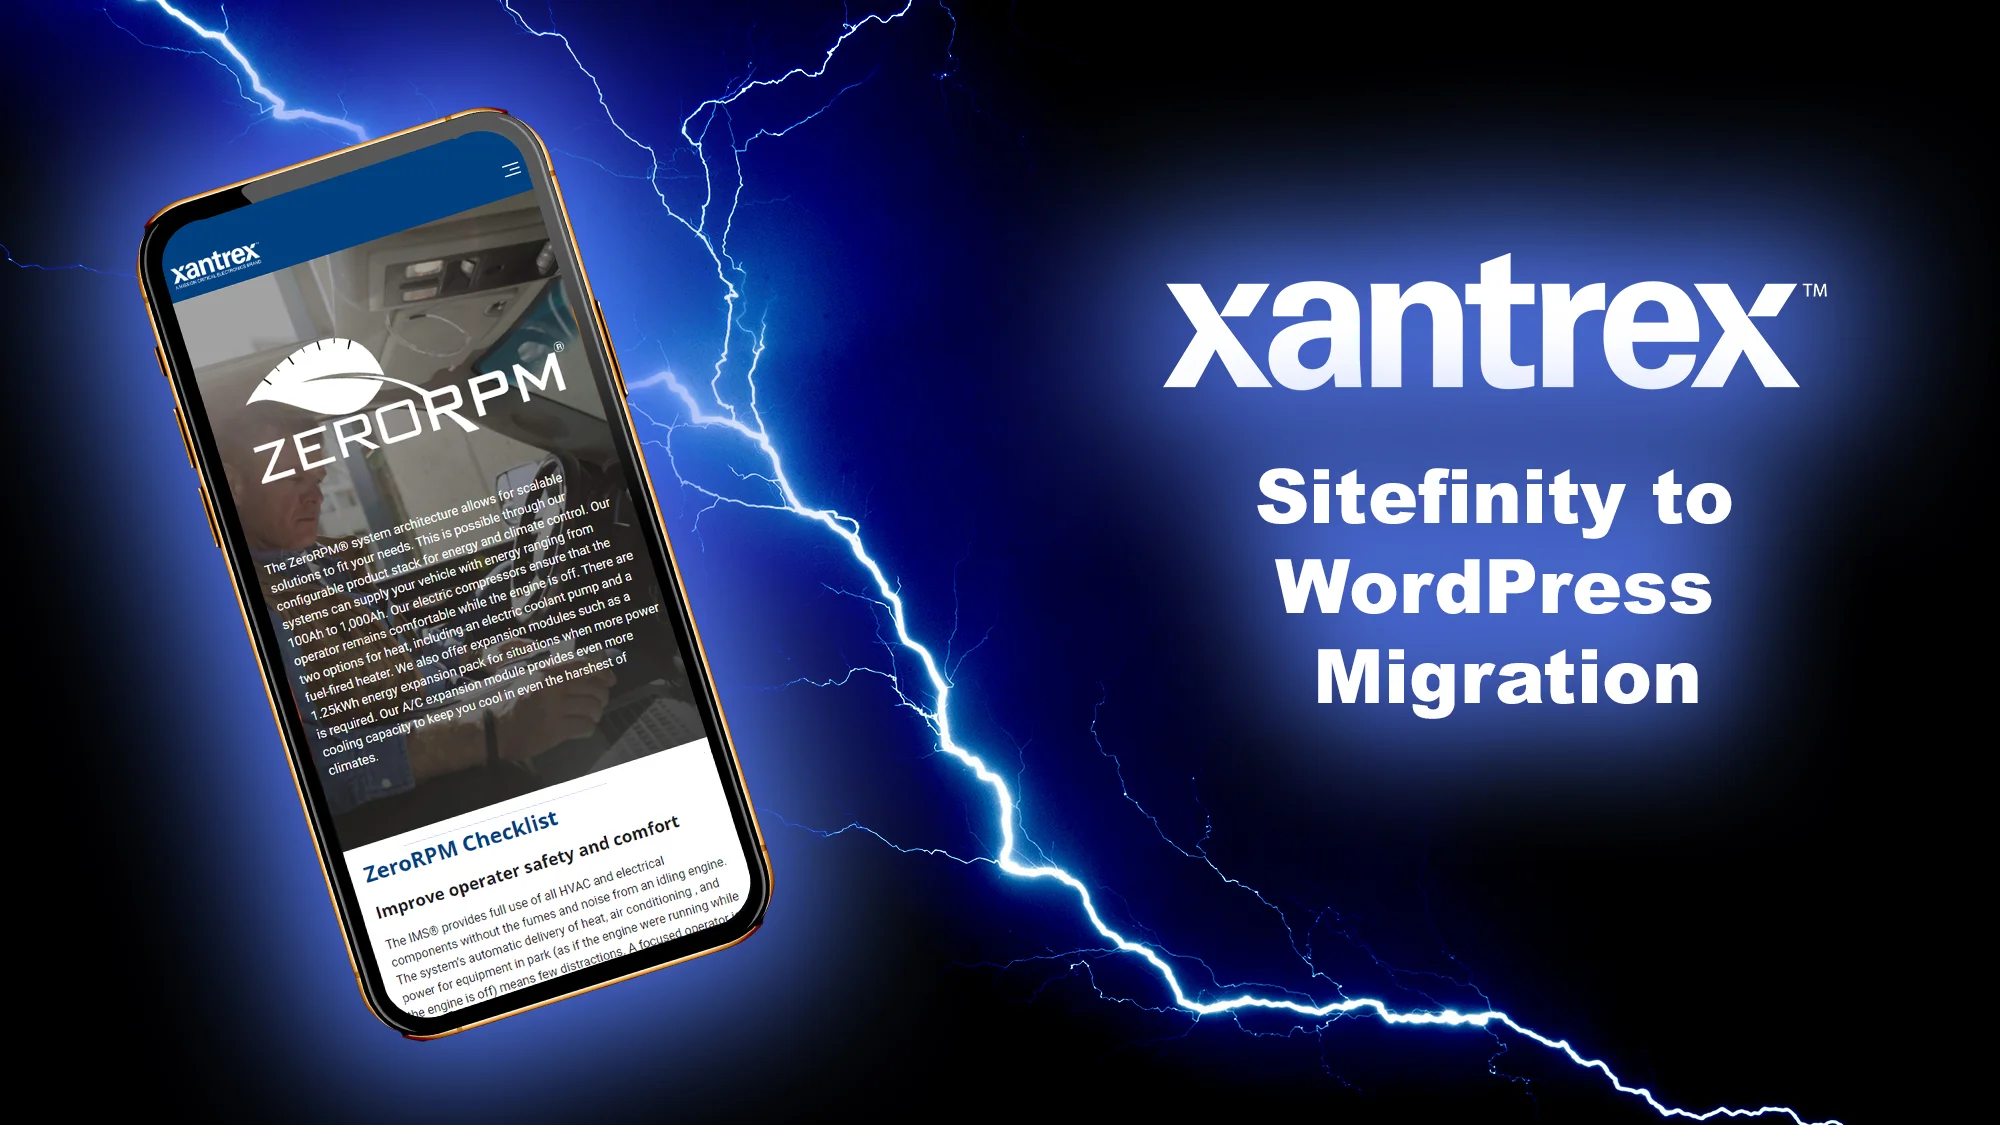 Sitefinity to WordPress migration for Xantrex